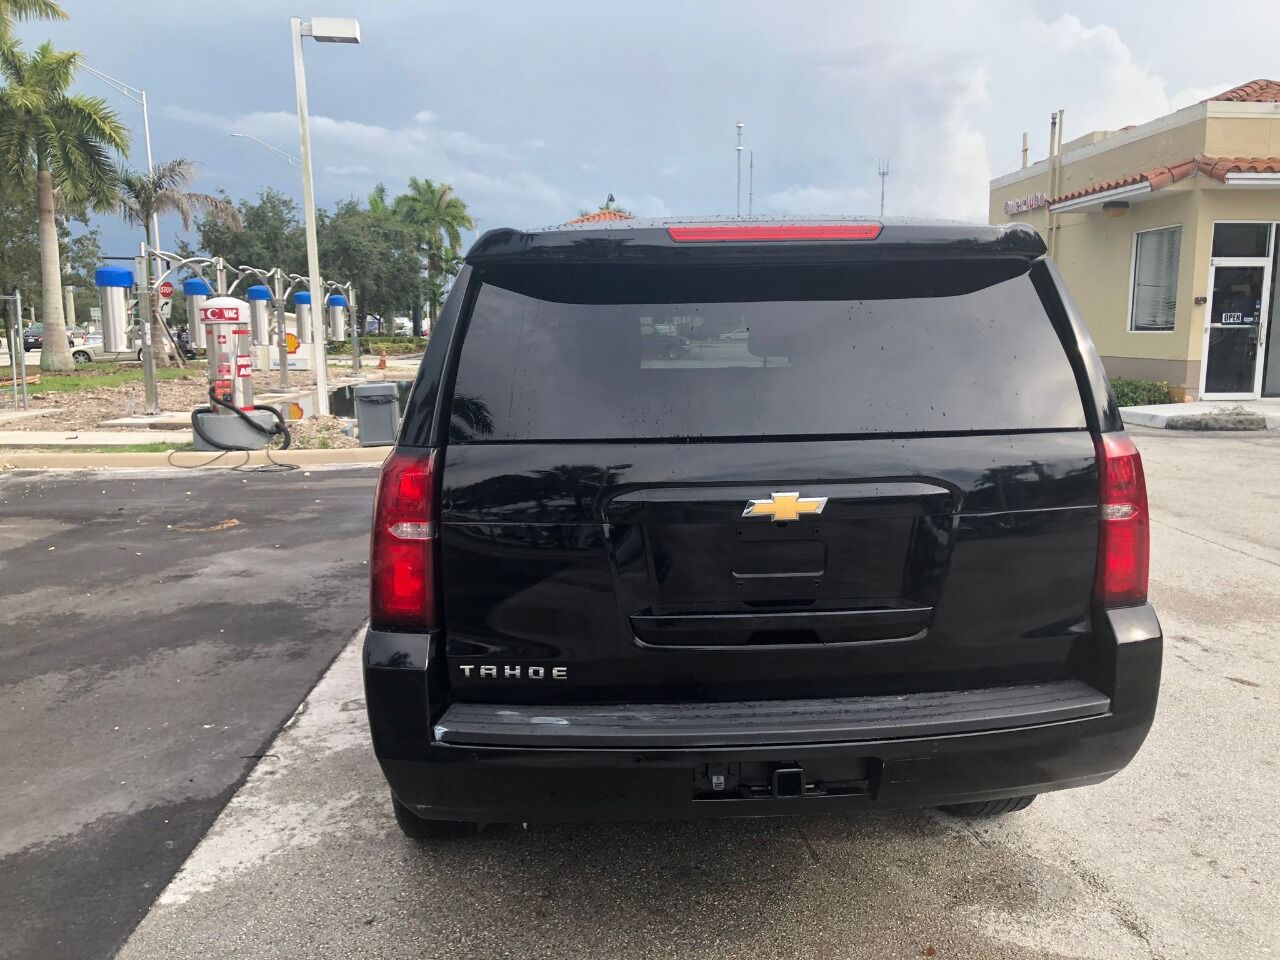 2019 Chevrolet Tahoe SUV - $32,500